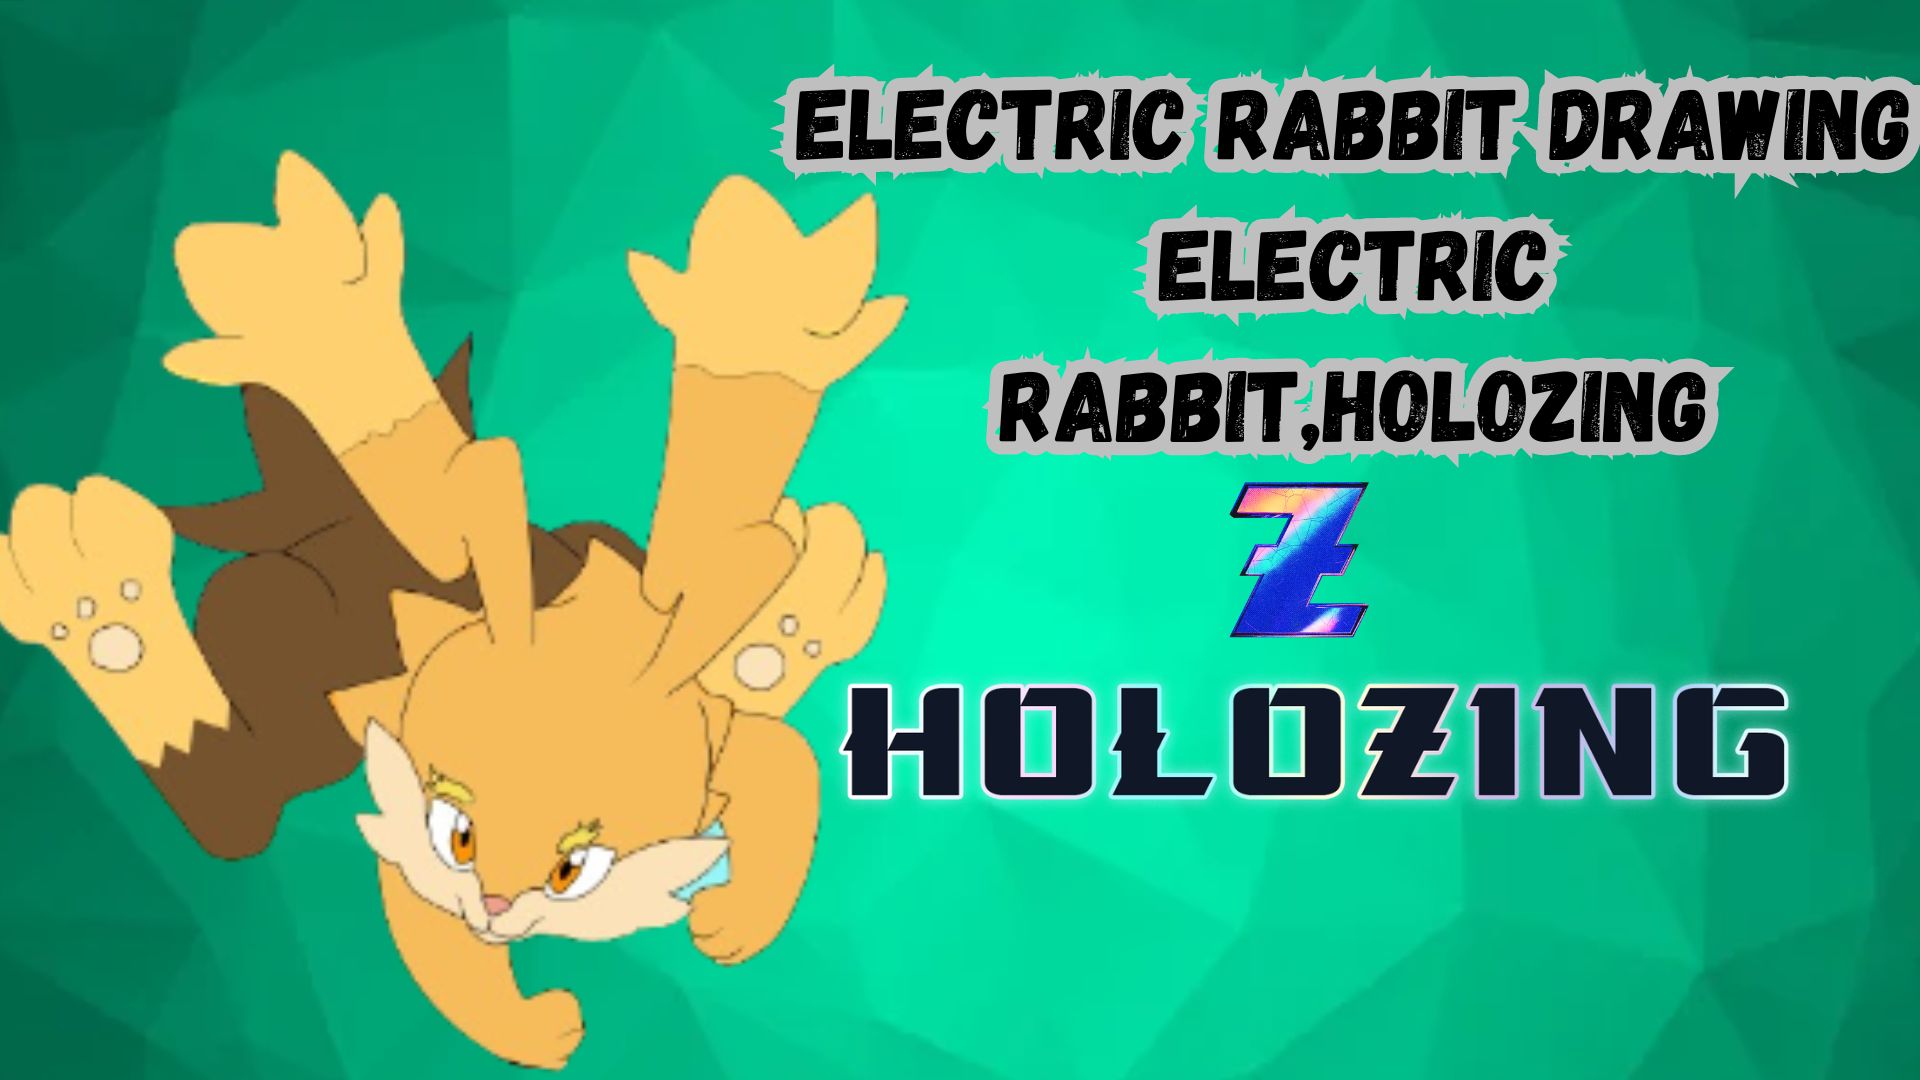 Electric Rabbit drawing Electric Rabbit,holozing.jpg